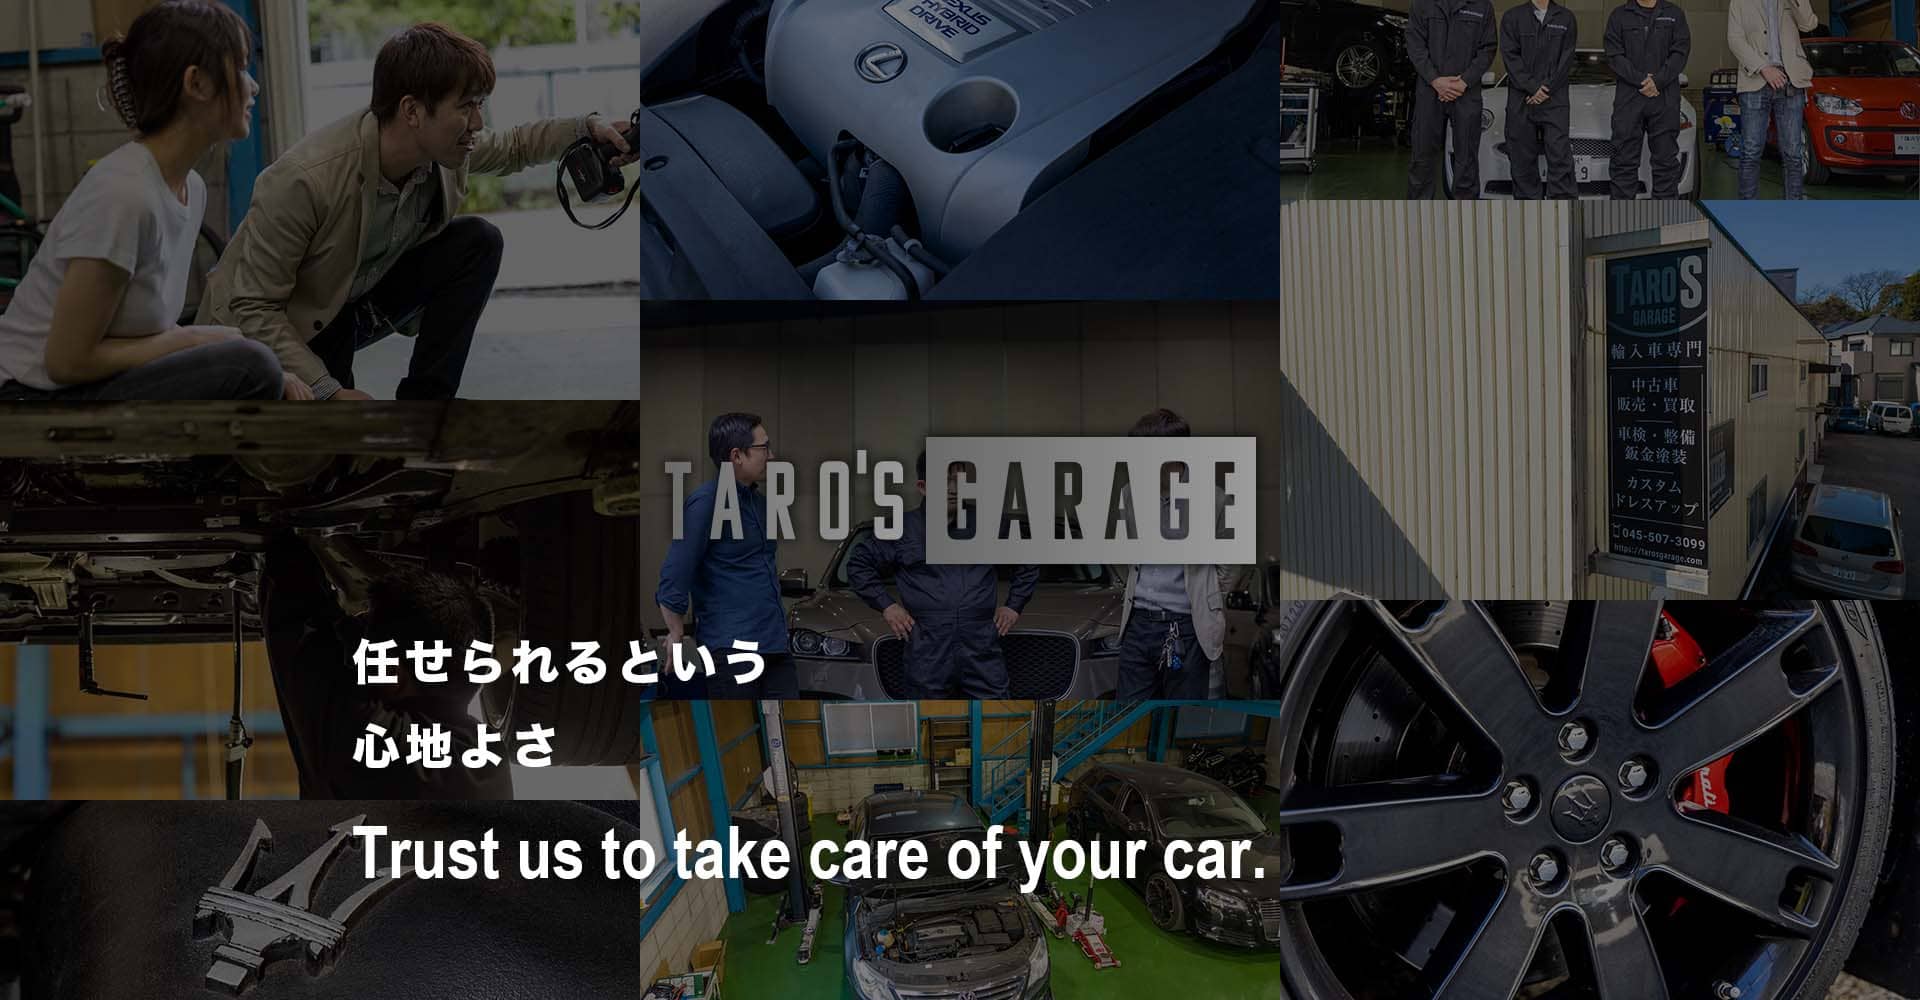 TARO'S GARAGE 任せられるという心地よさ　Trust us to take care of your car.